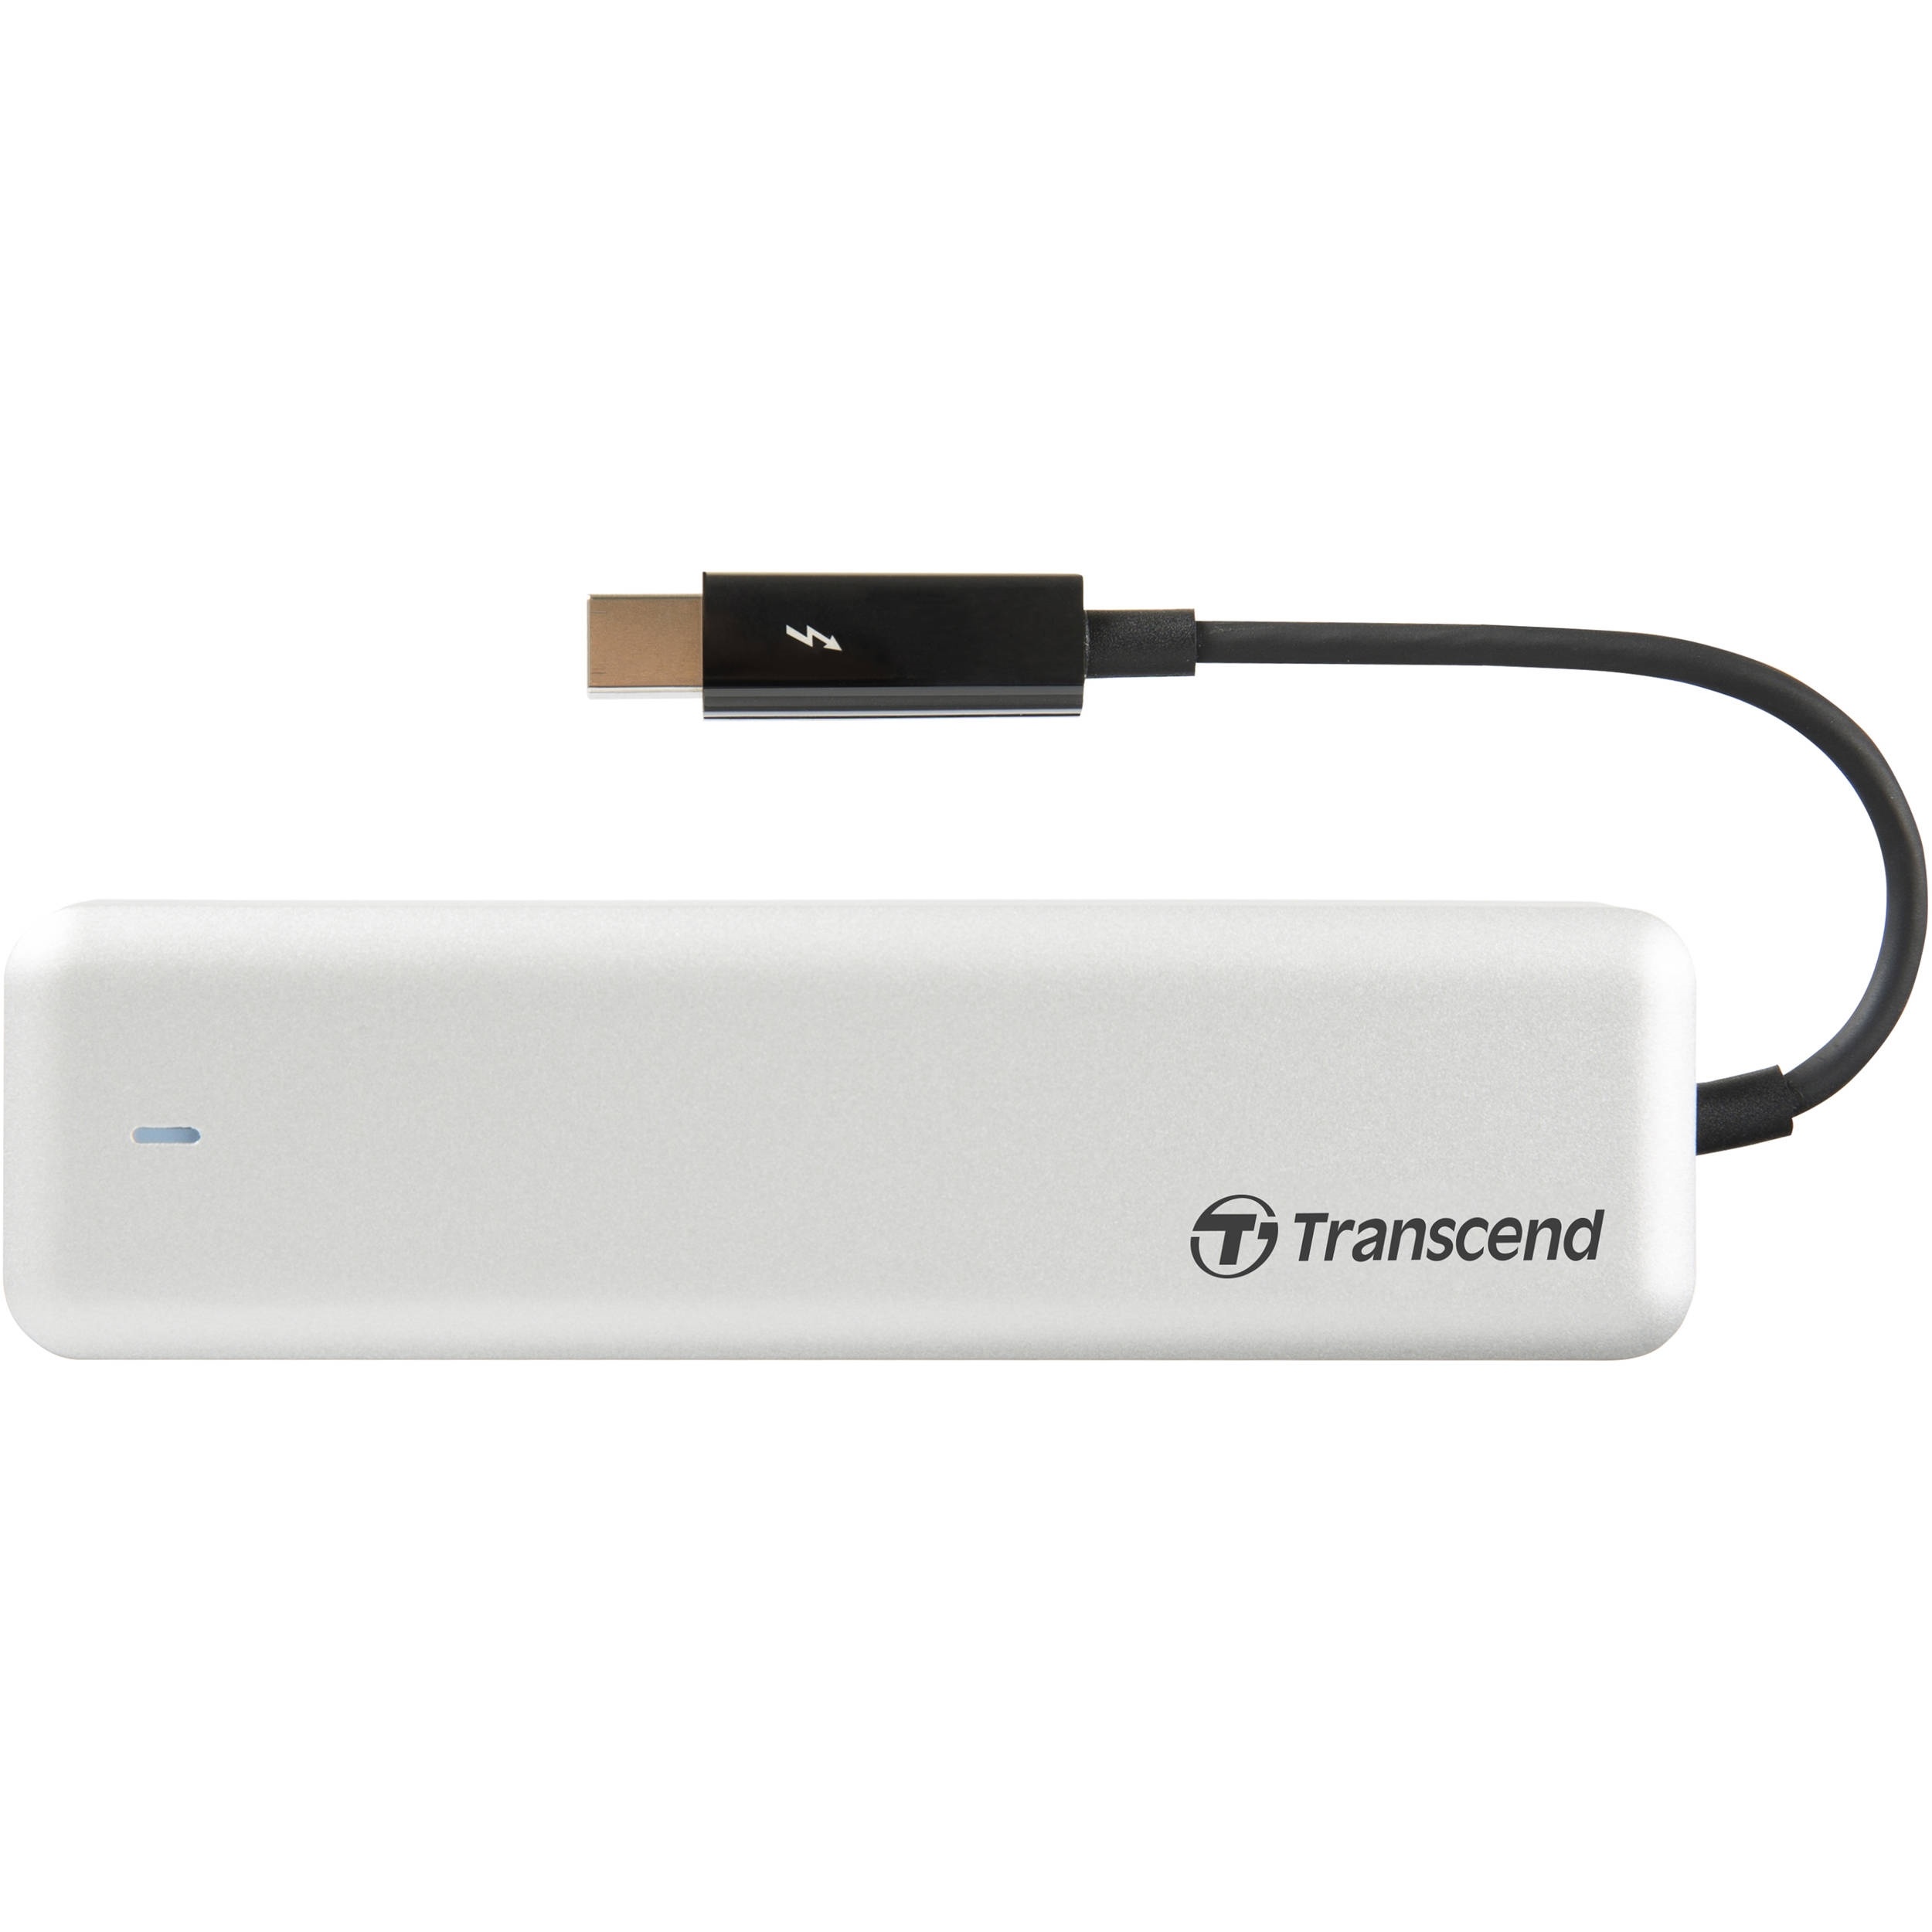 Transcend 960GB JetDrive 825 Thunderbolt External SSD